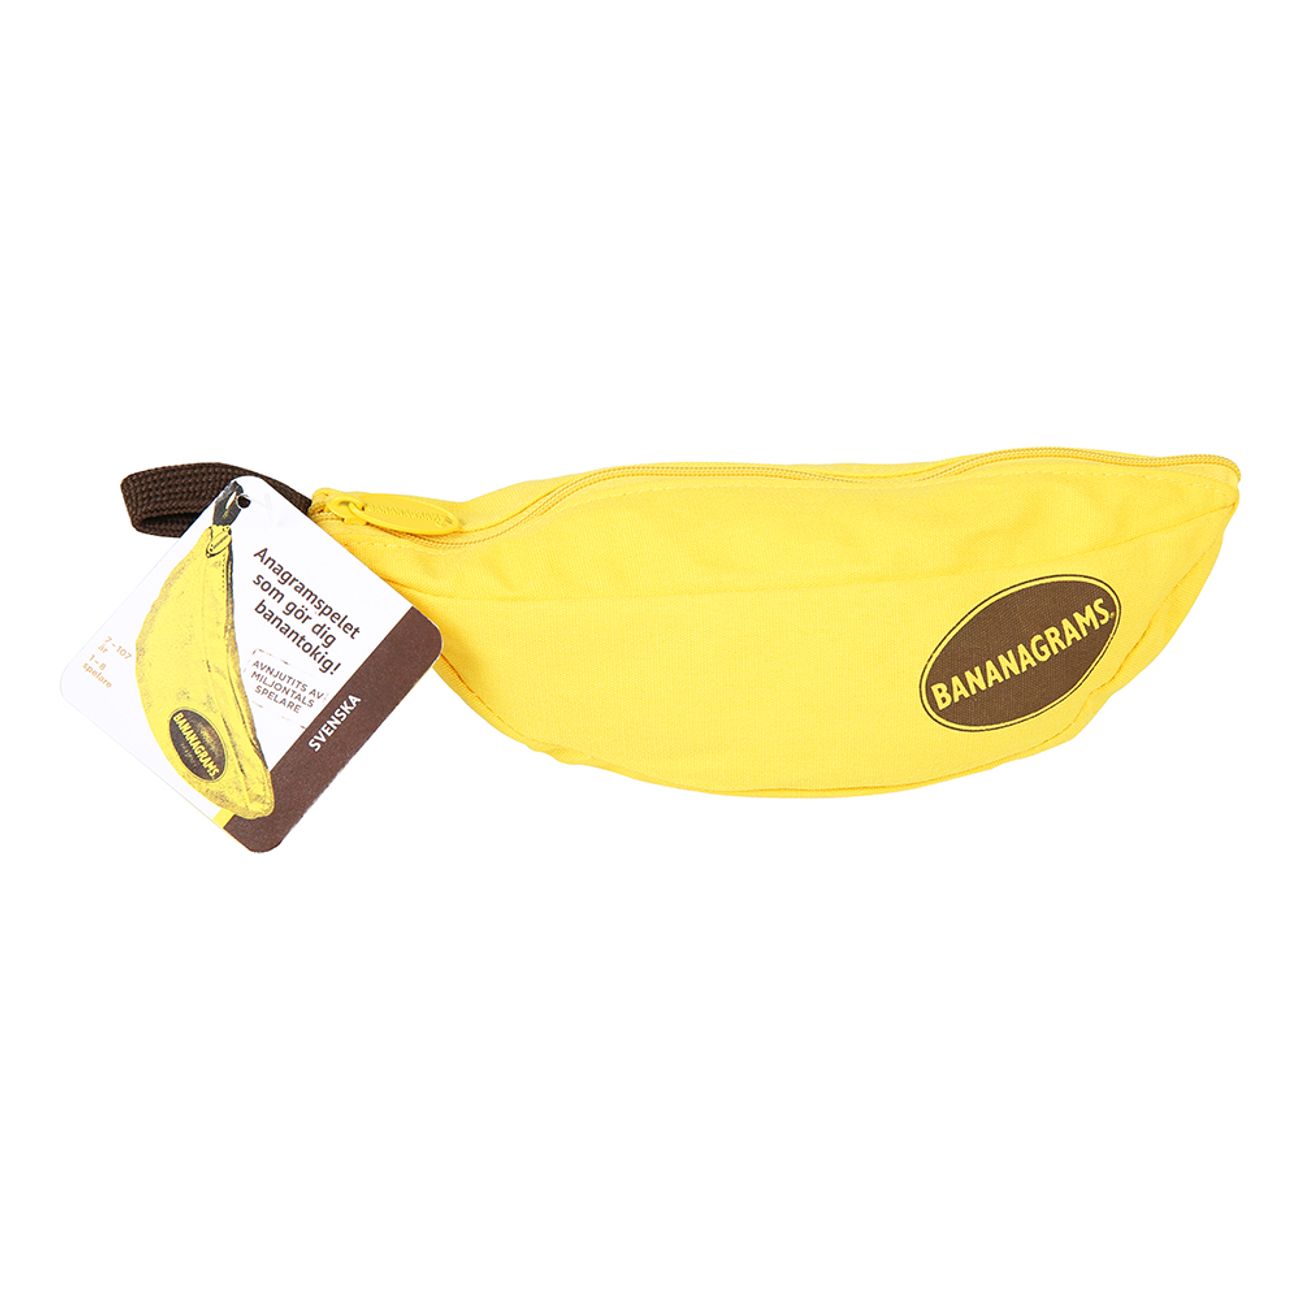 bananagrams-1